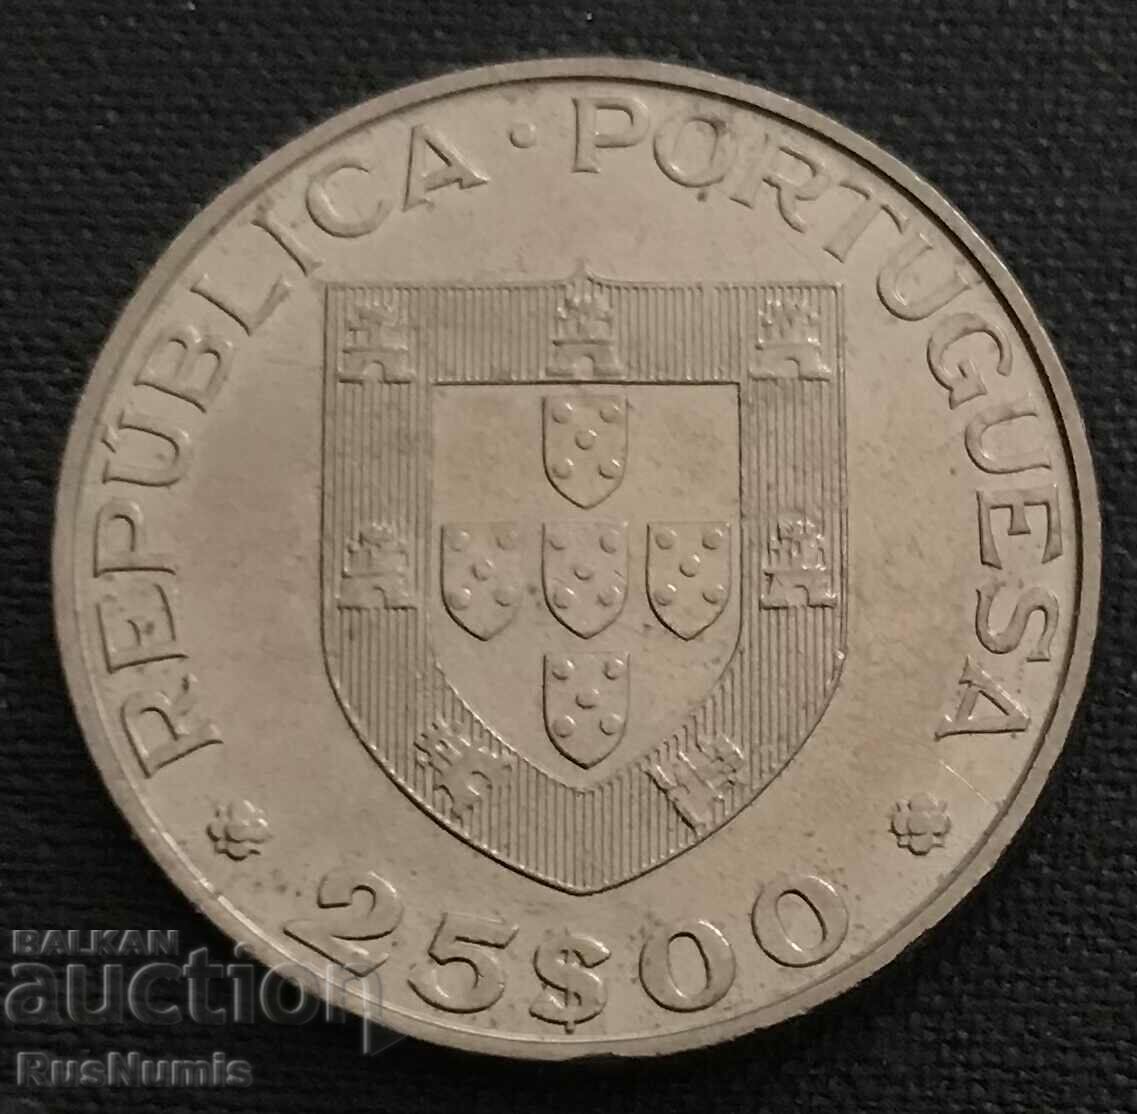 Portugal. 25 escudos 1986. EEC membership.